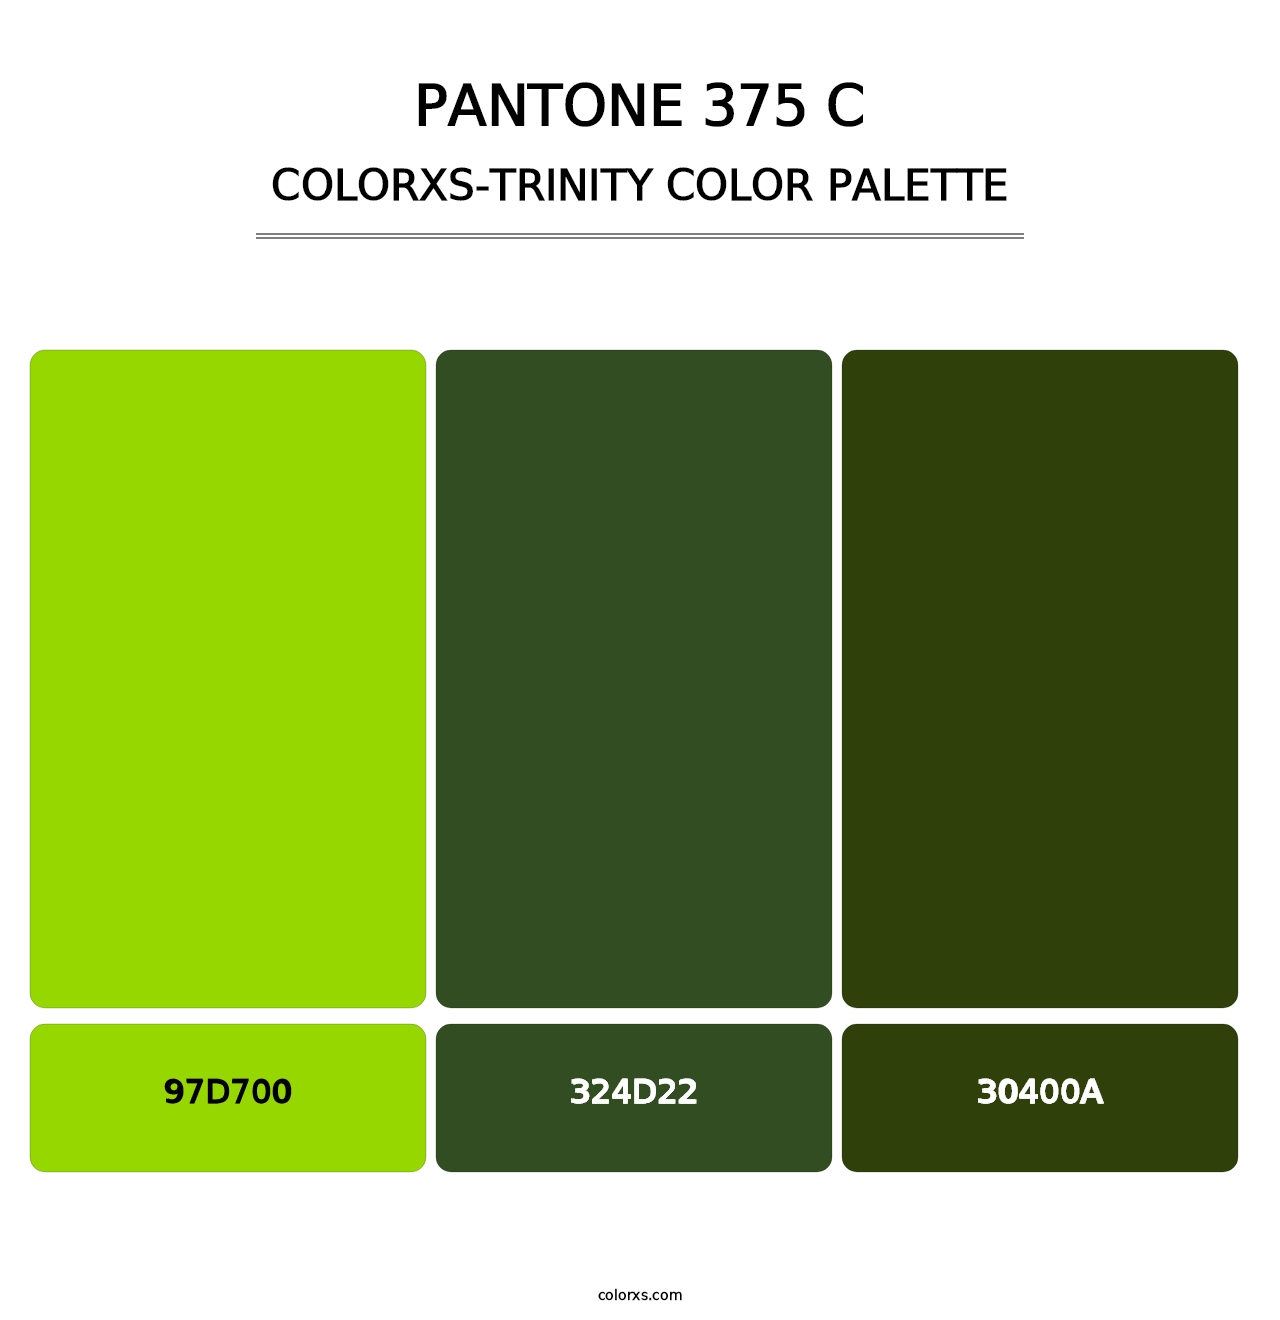 PANTONE 375 C - Colorxs Trinity Palette